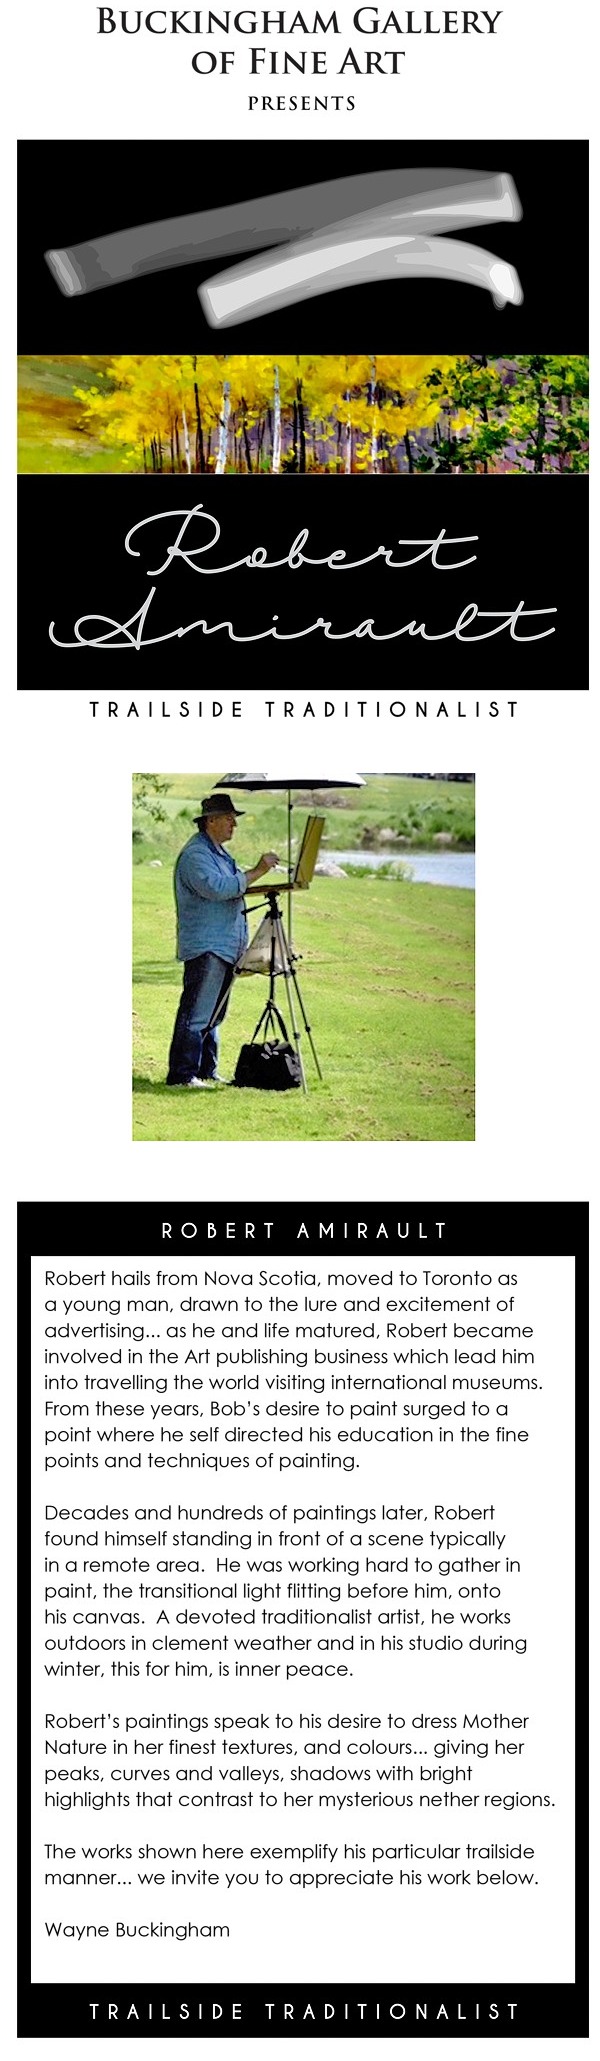 Robert Amirault - Trailside Traditionalist